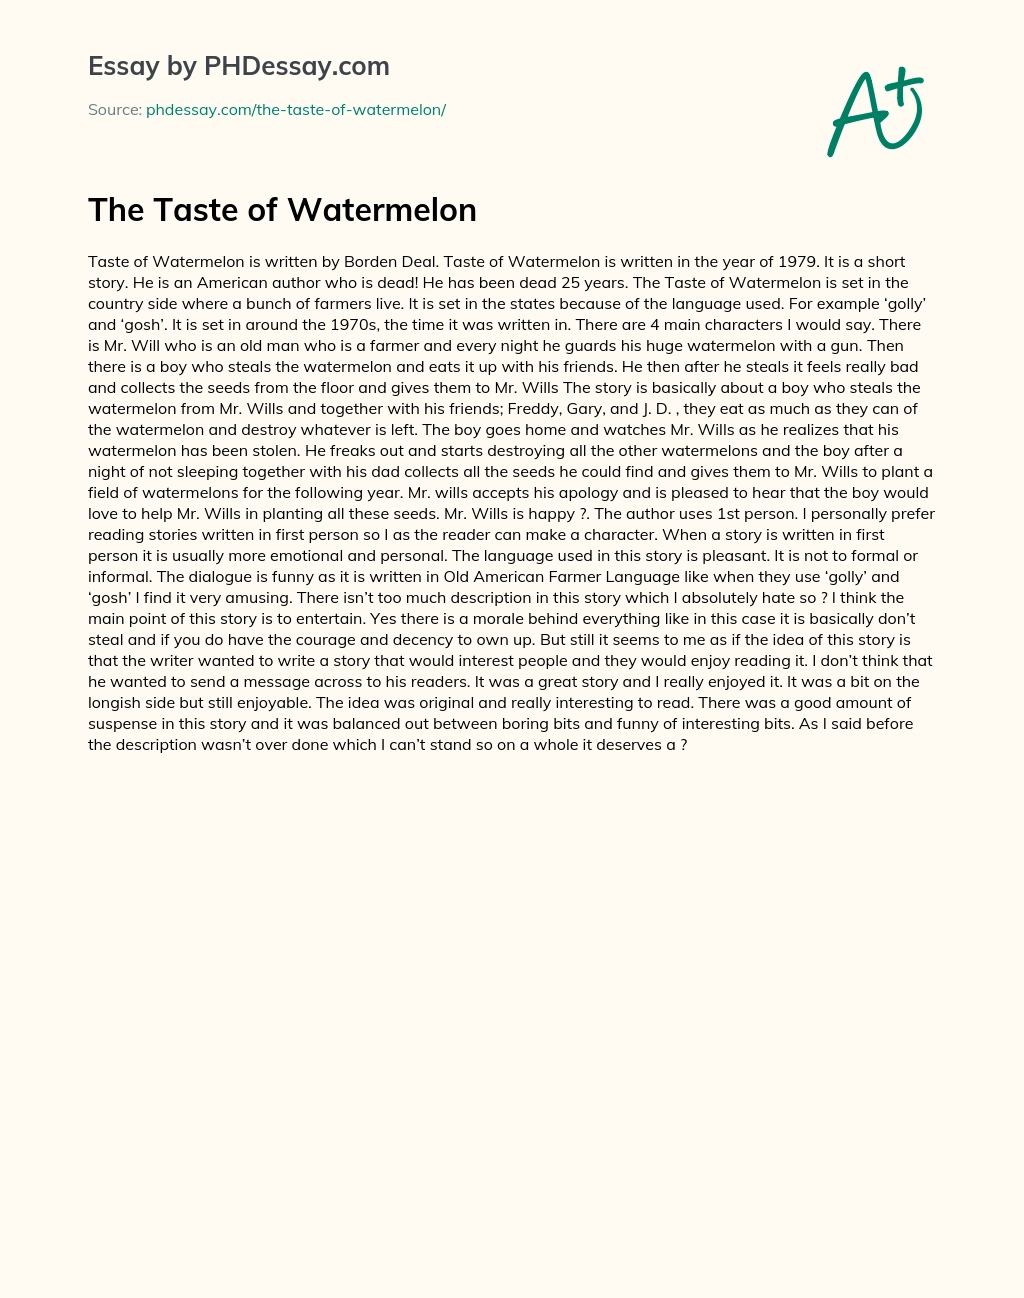 The Taste of Watermelon essay